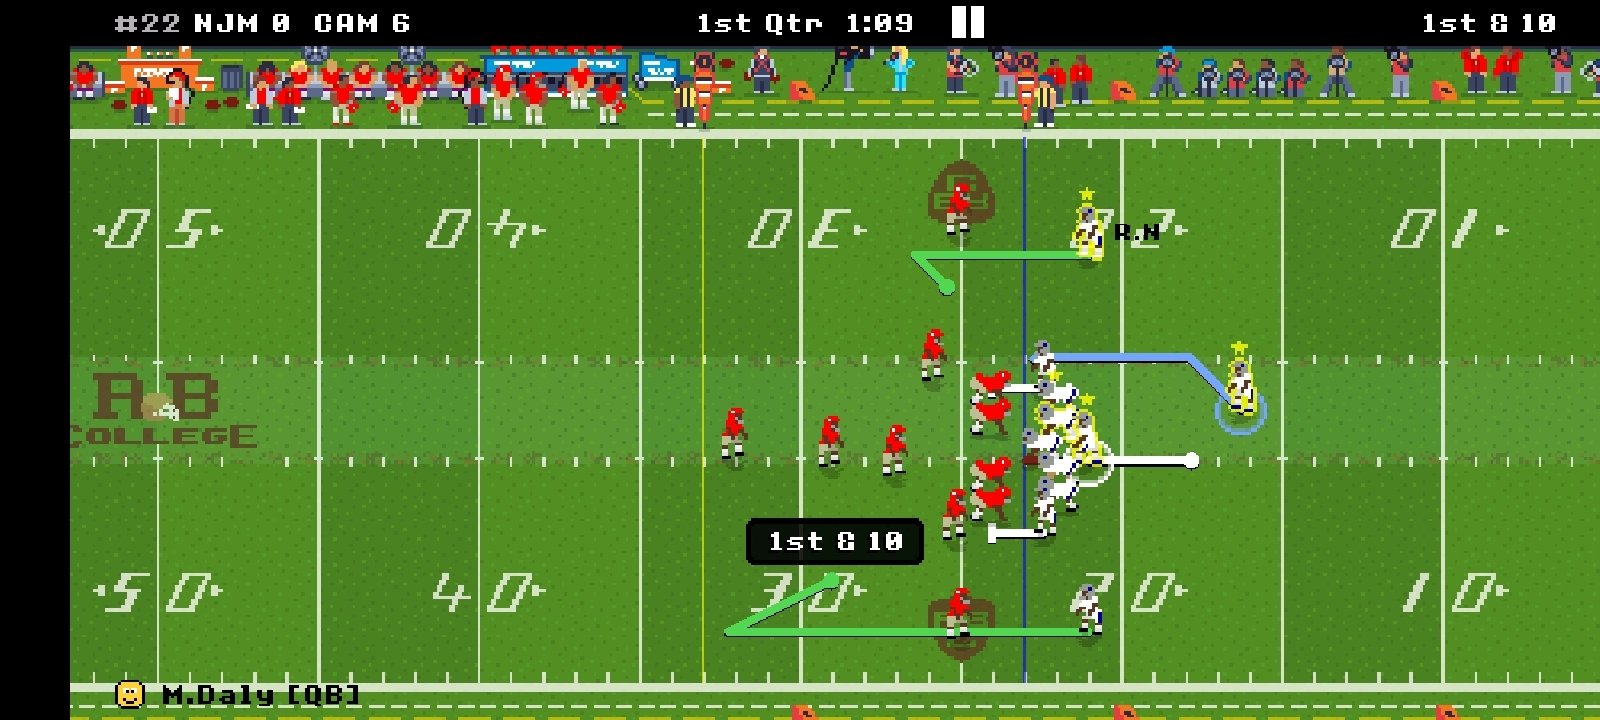 Retro Bowl Game - The Latest Version